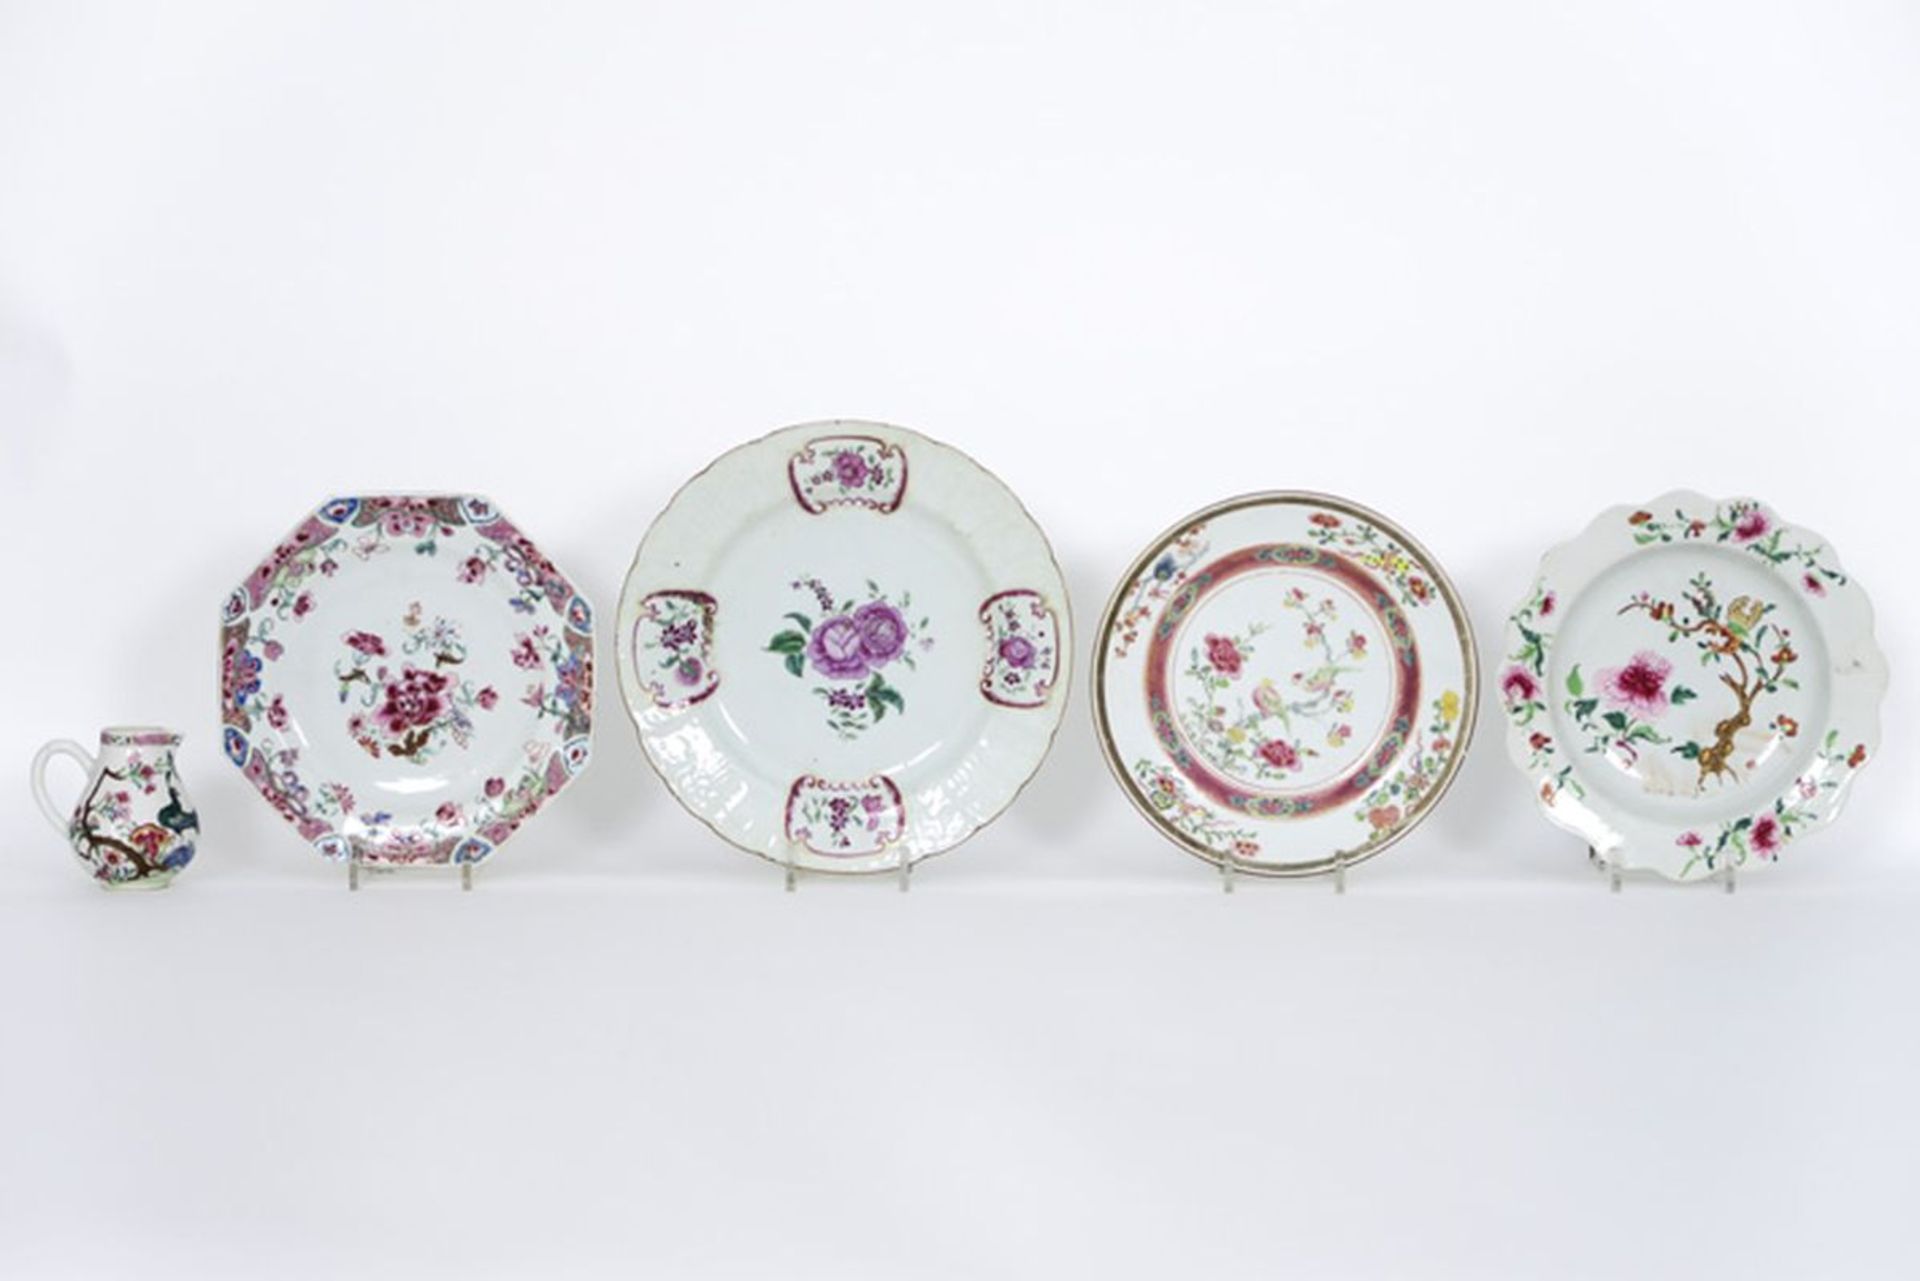 Lot (5) achttiende eeuws Chinees porselein met Famille Rose-decor : vier borden en [...]